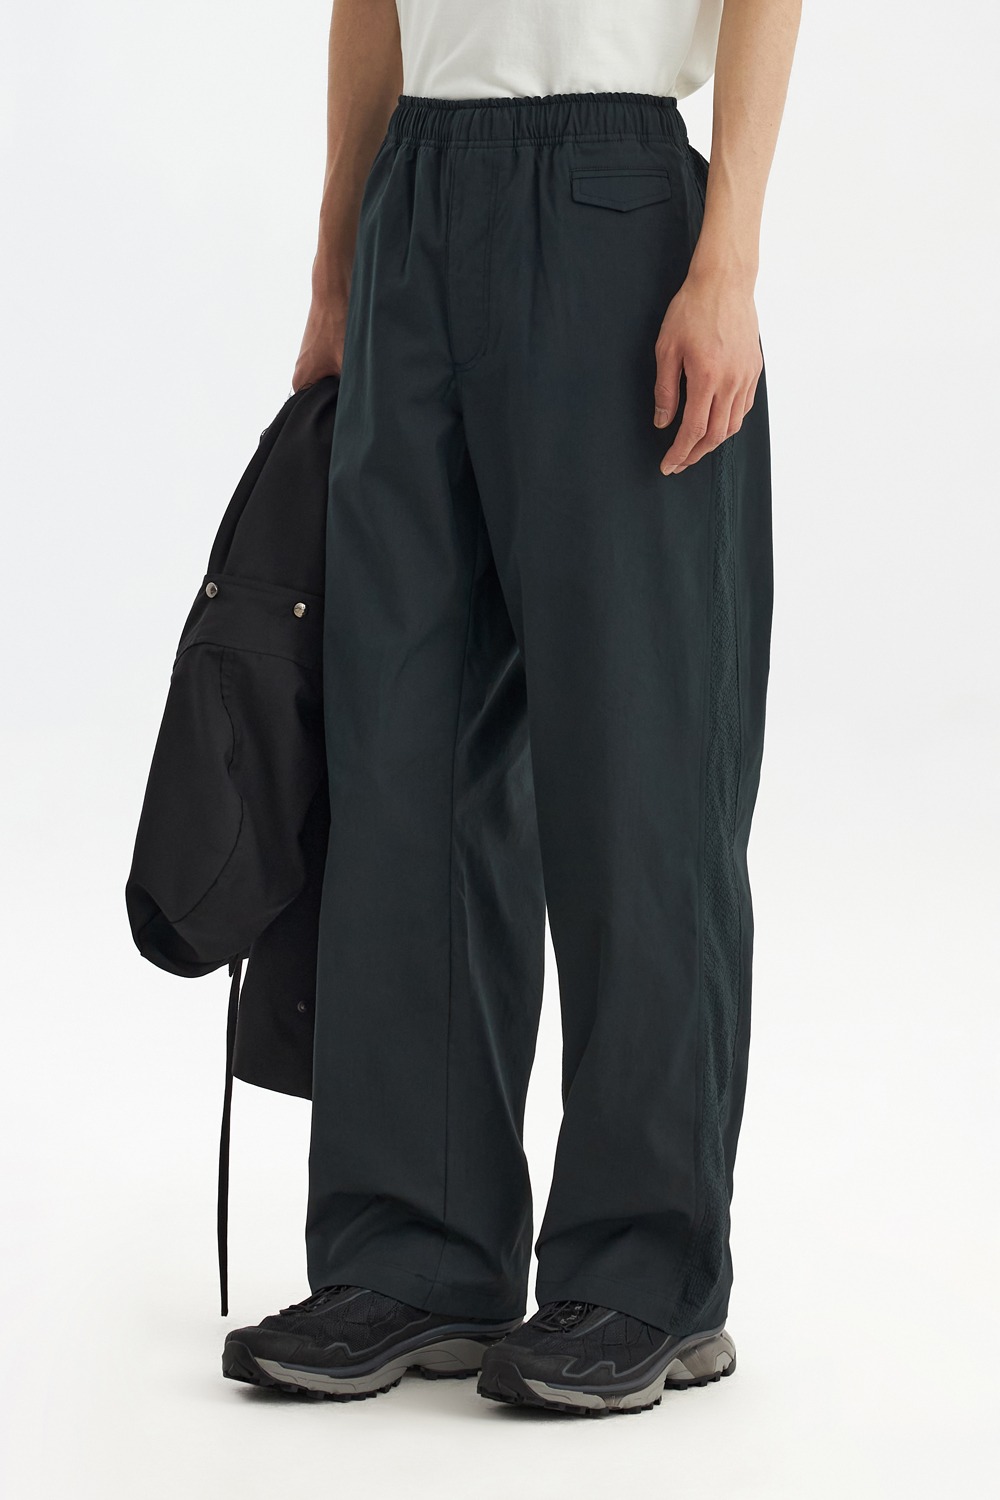 Pocket Trouser-Charcoal